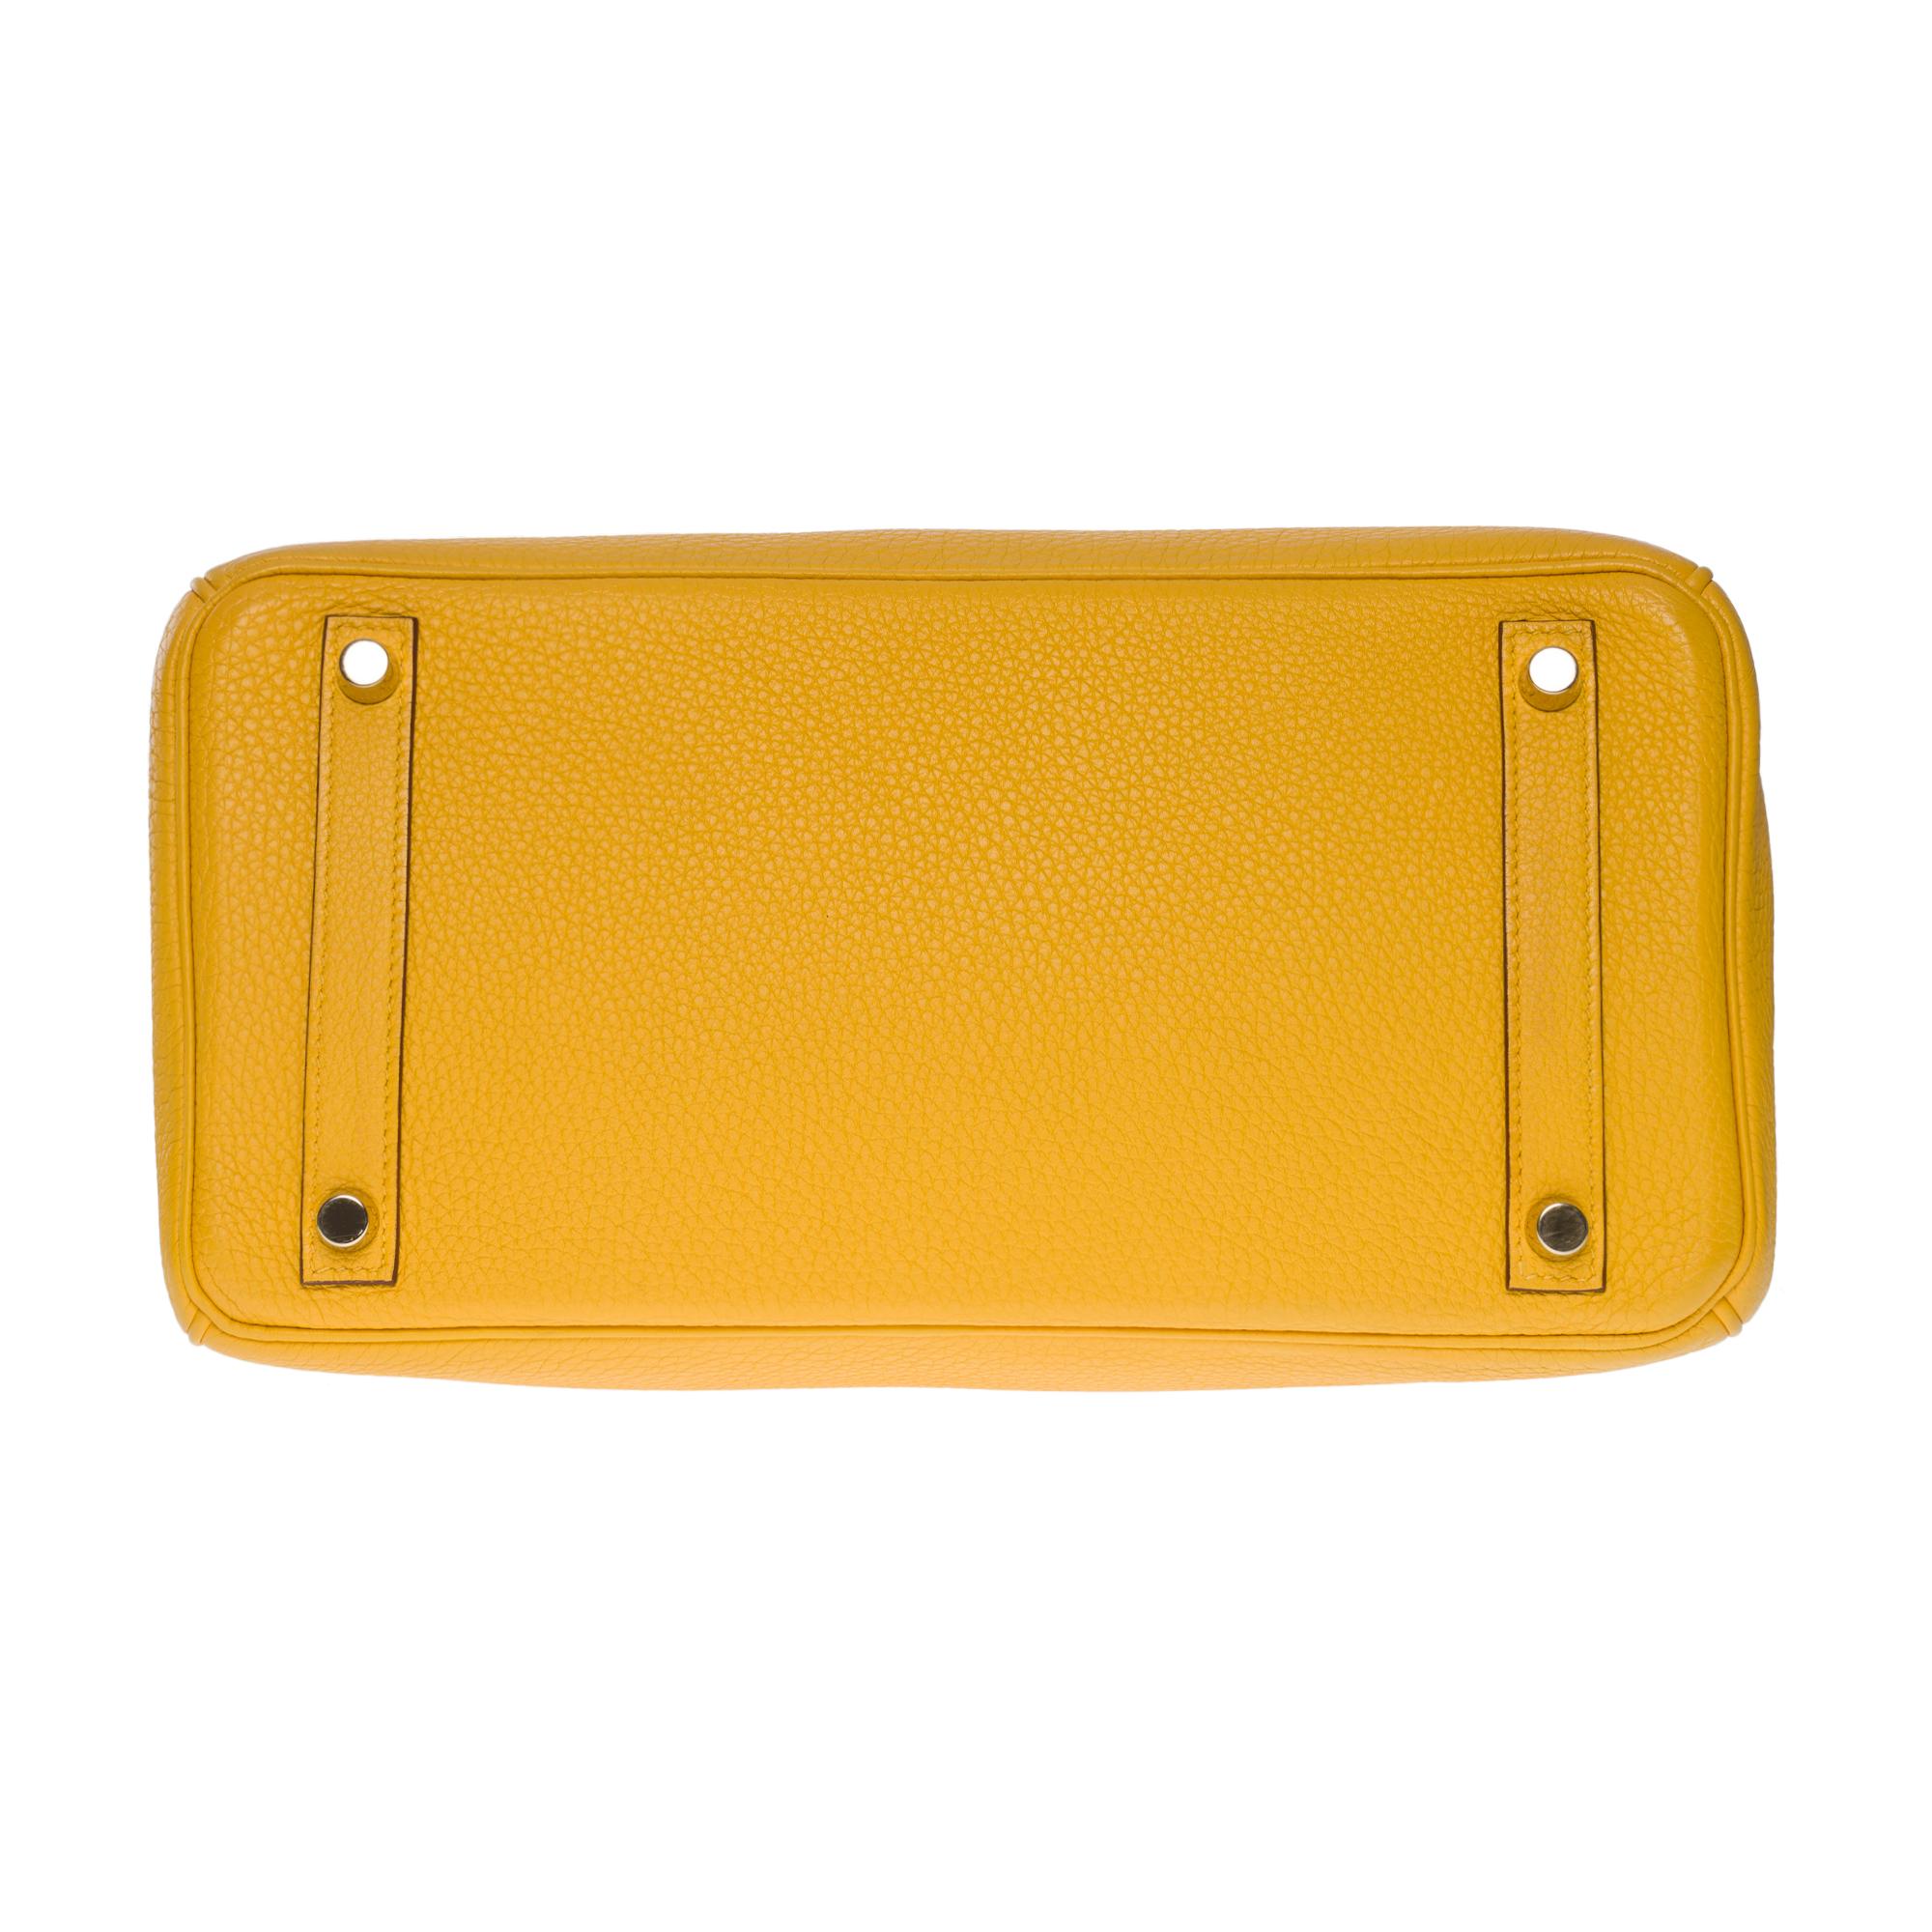 Amazing & Bright Hermès Birkin 30 handbag in Yellow Togo leather, GHW For Sale 6